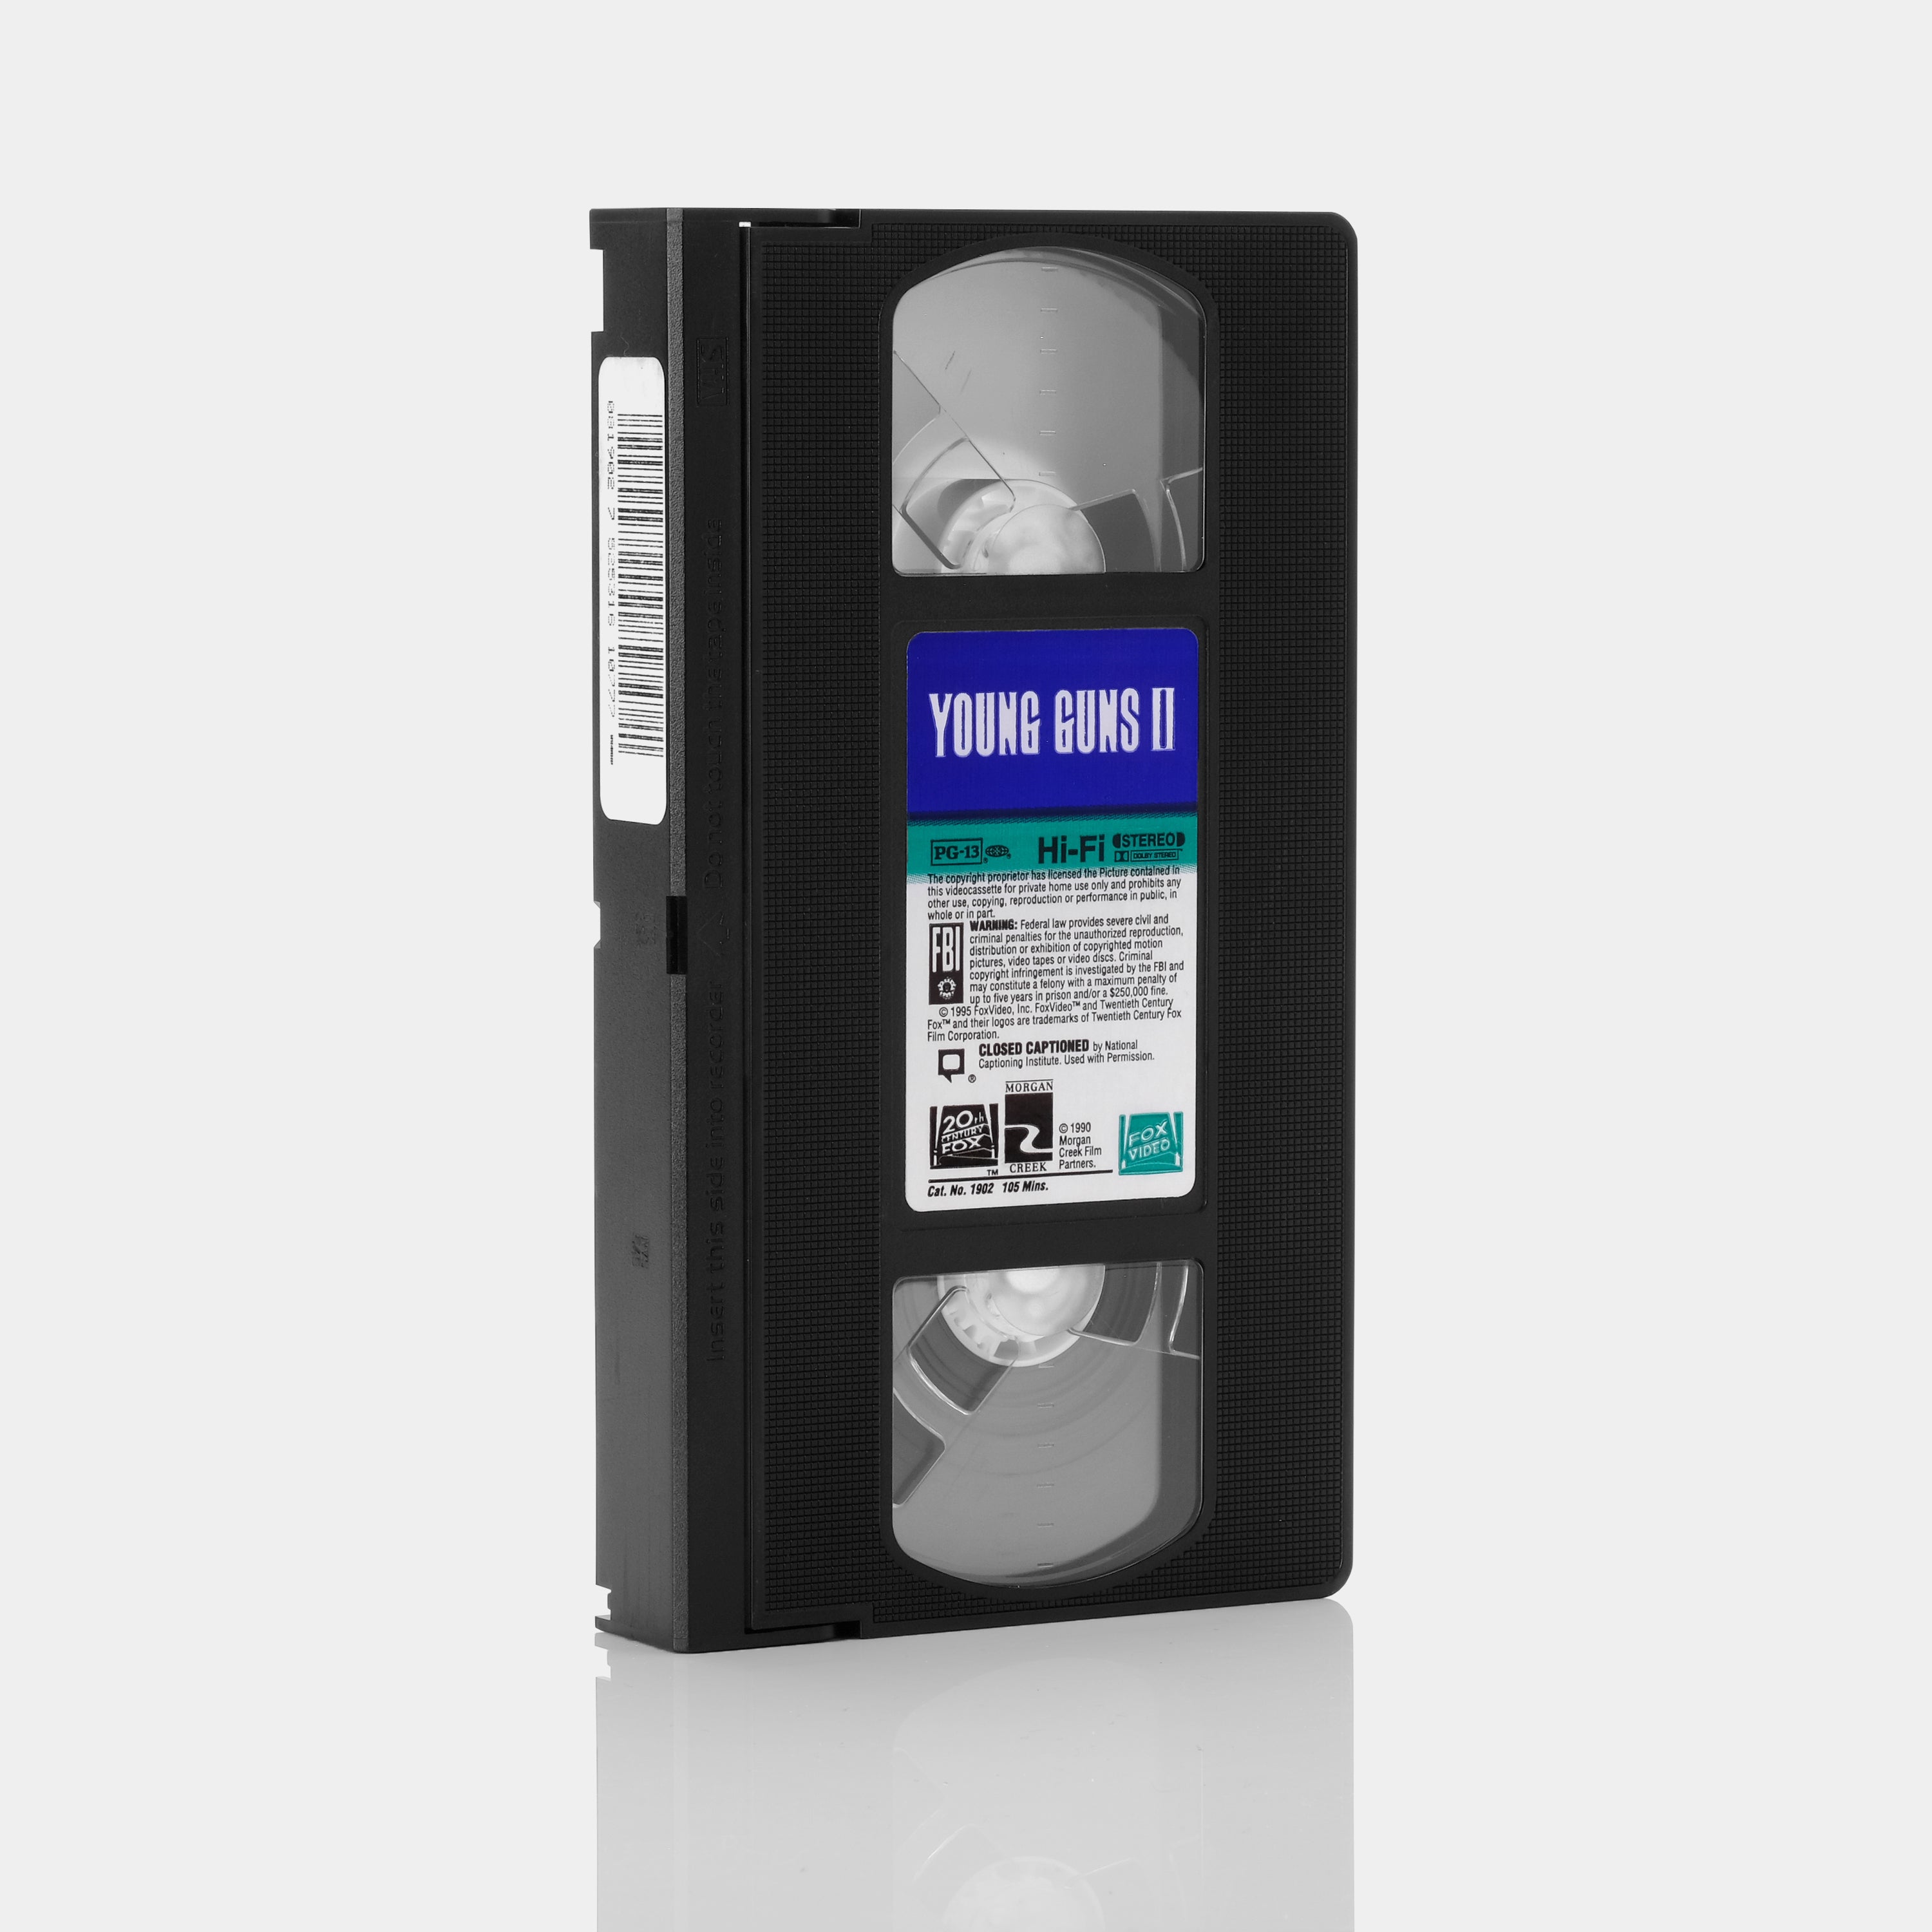 Young Guns II VHS Tape